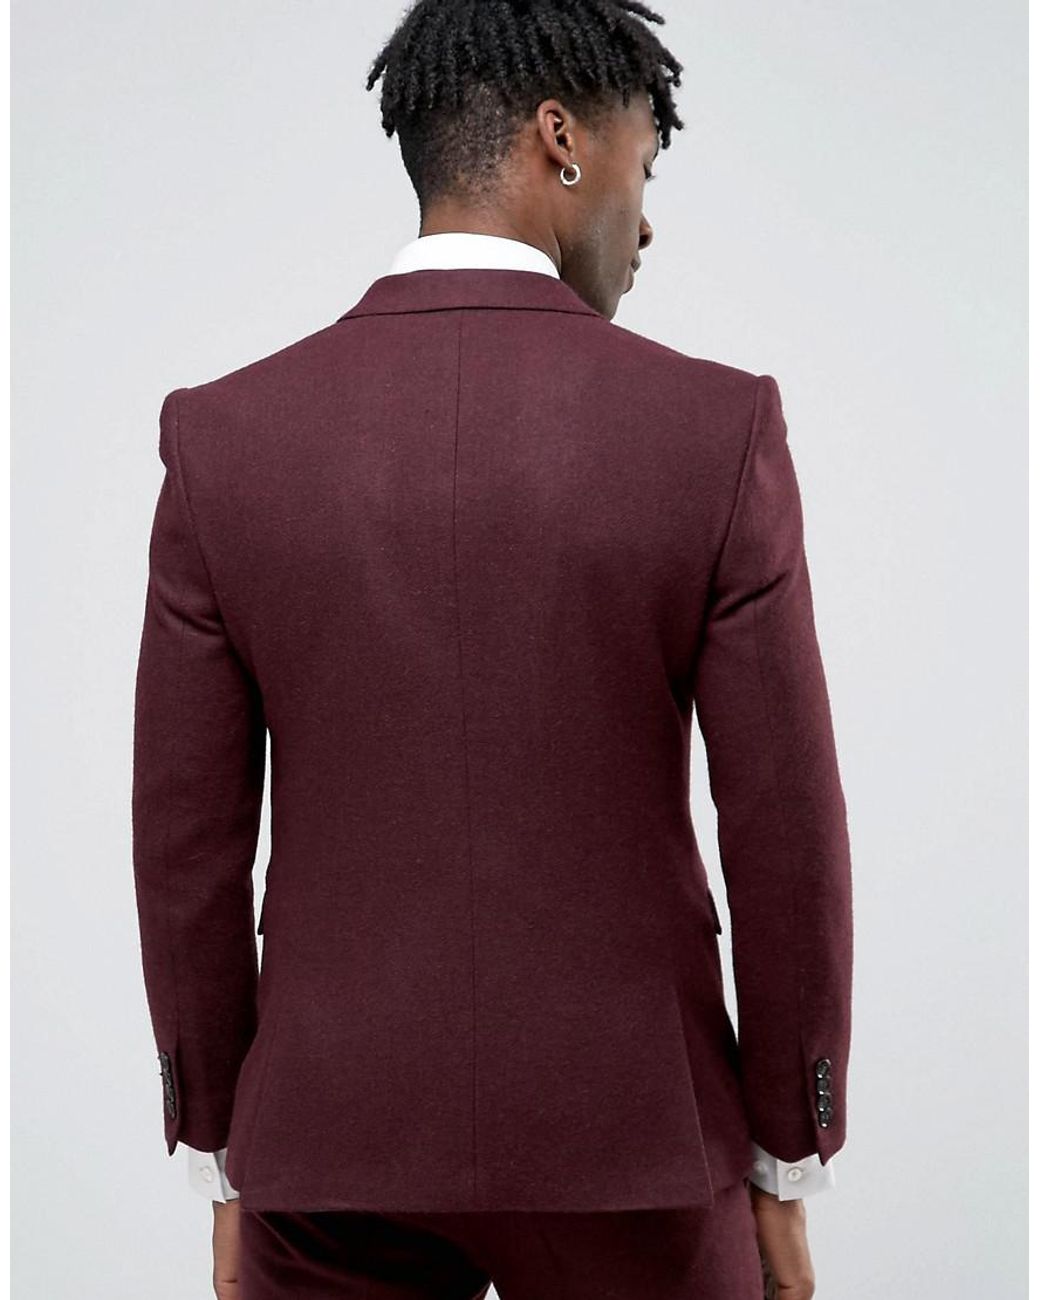 Top more than 125 burgundy suit jacket - jtcvietnam.edu.vn